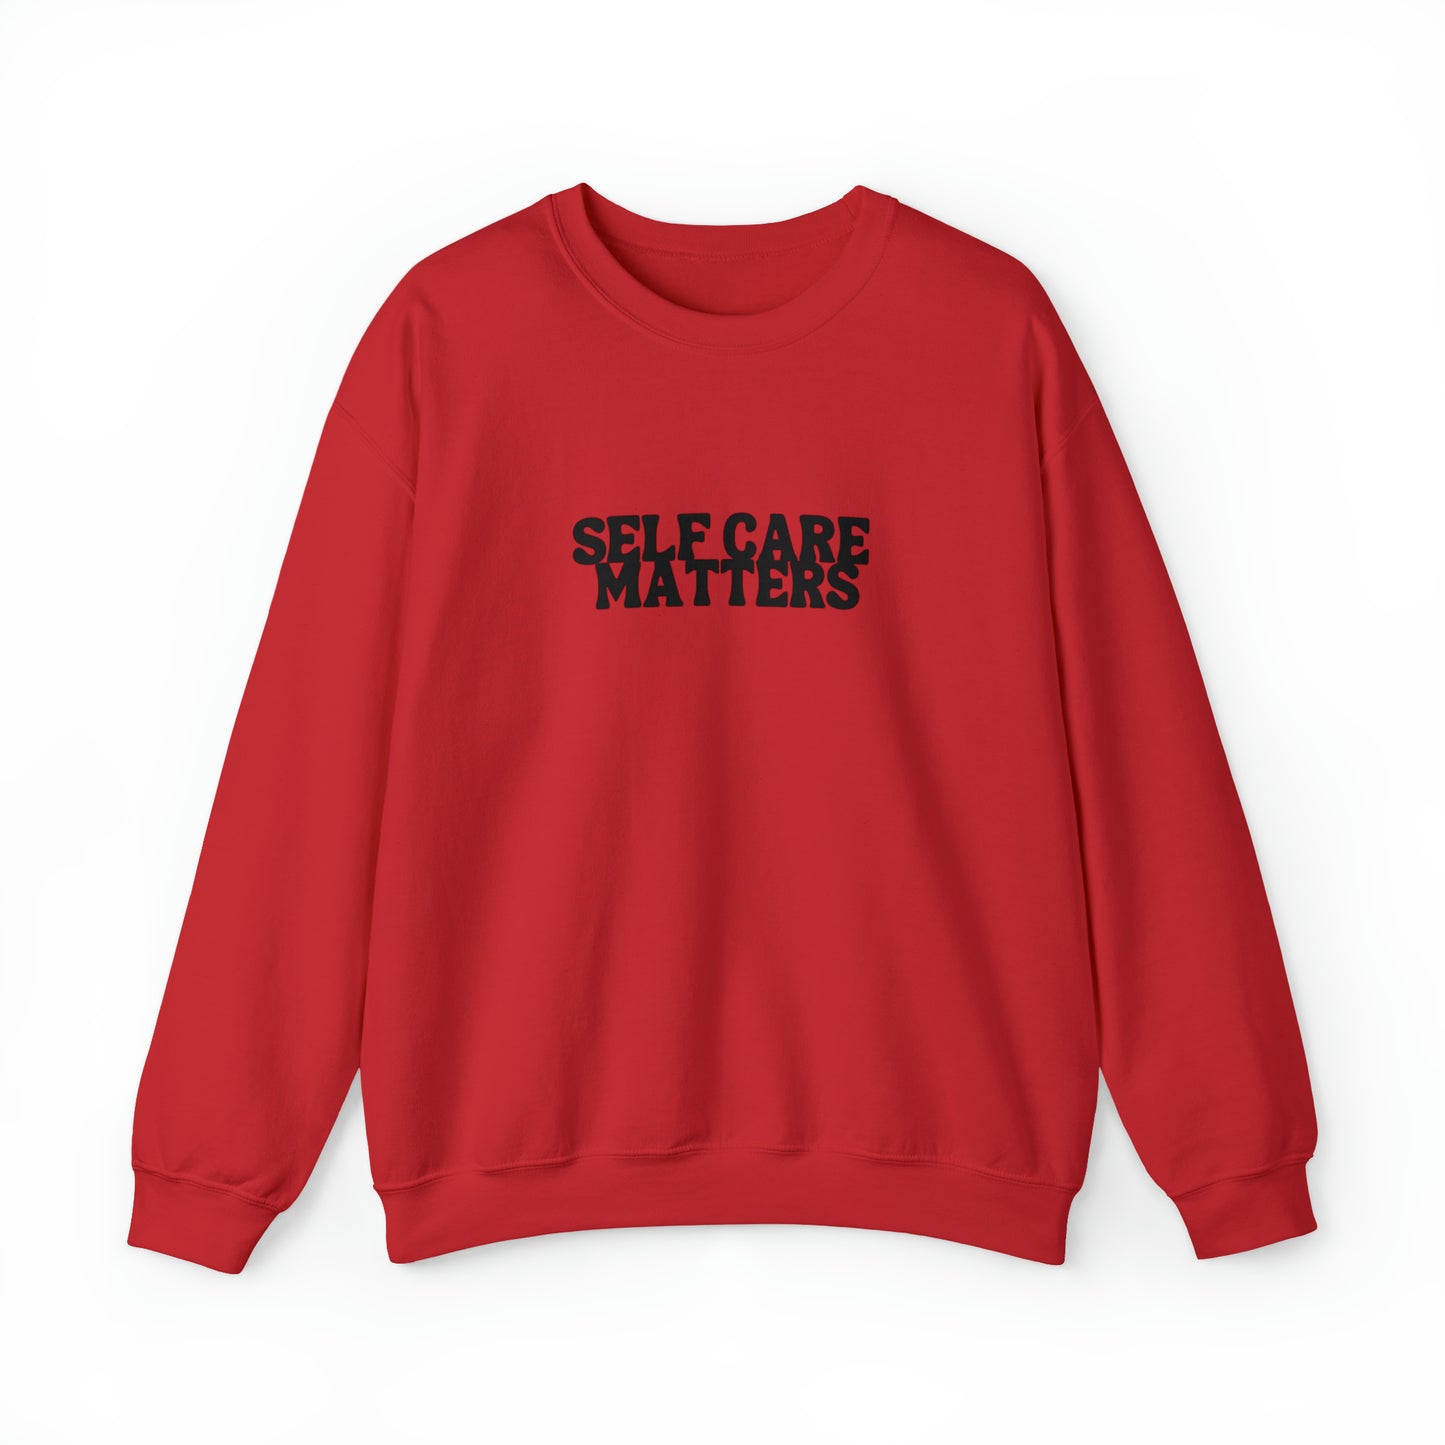 SELF CARE MATTERS - Unisex Crewneck Sweatshirt